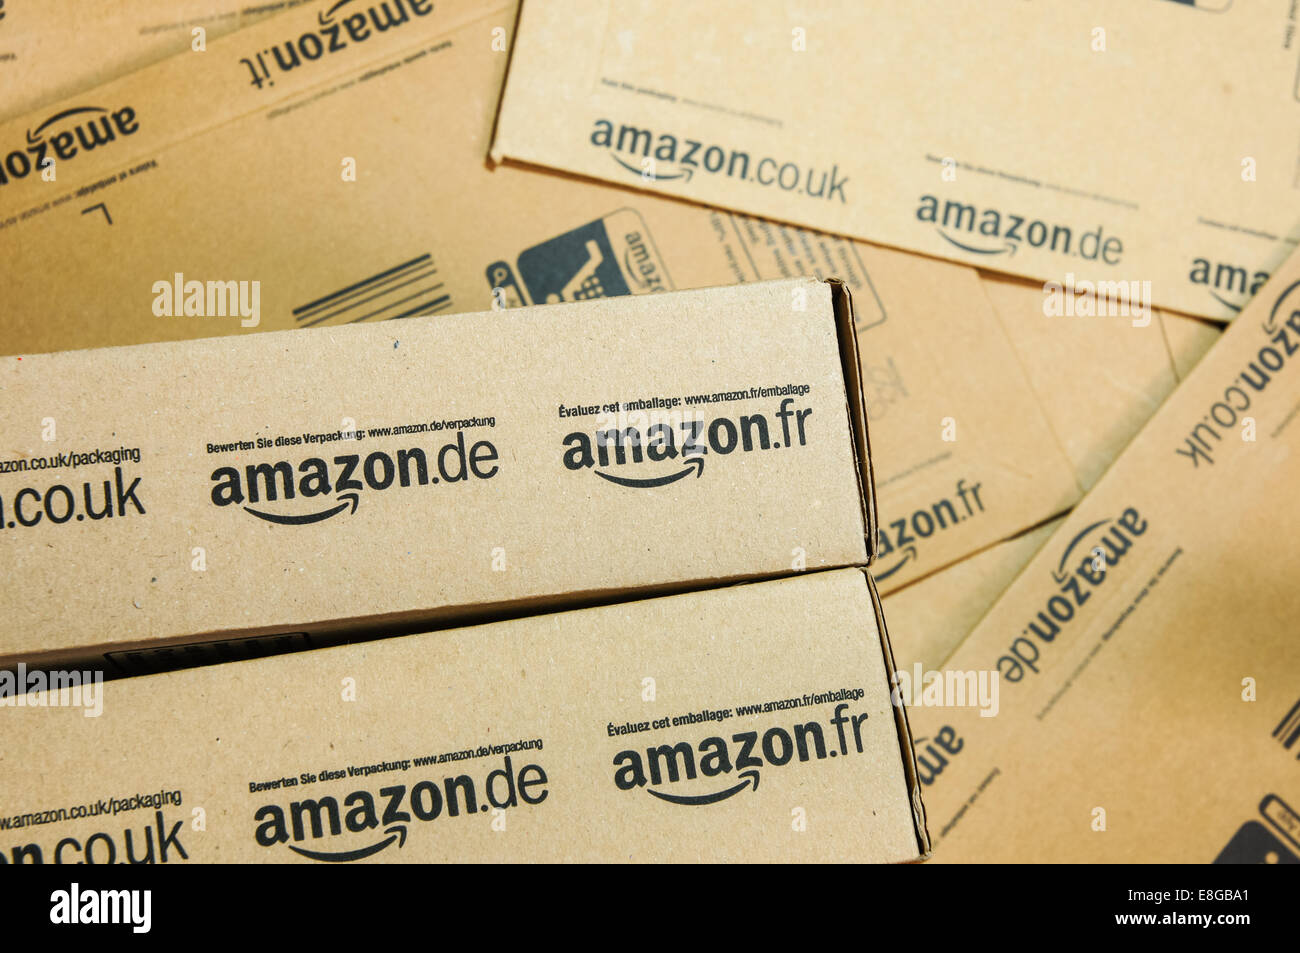 Amazon logo logos on boxes and packages, amazon boxes Stock Photo